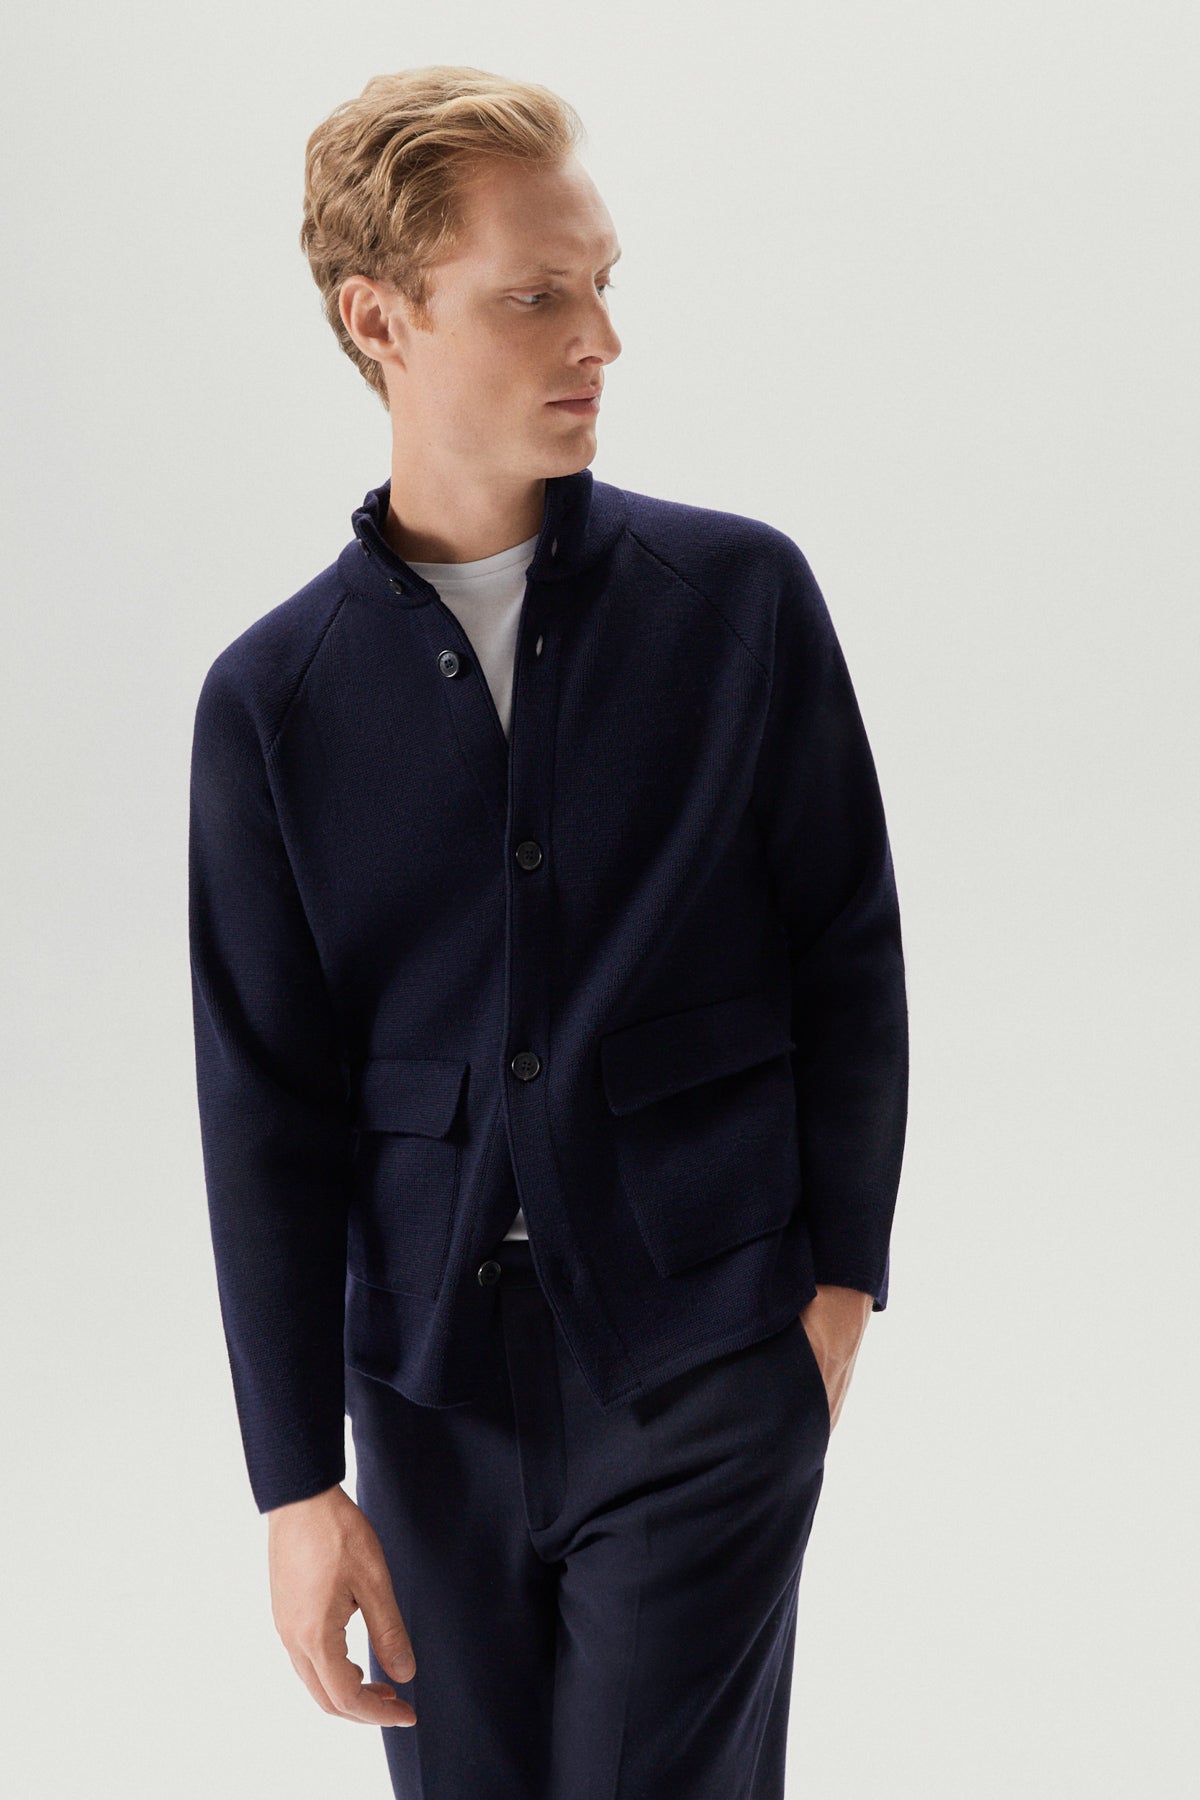 the merino wool high neck jacket oxford blue